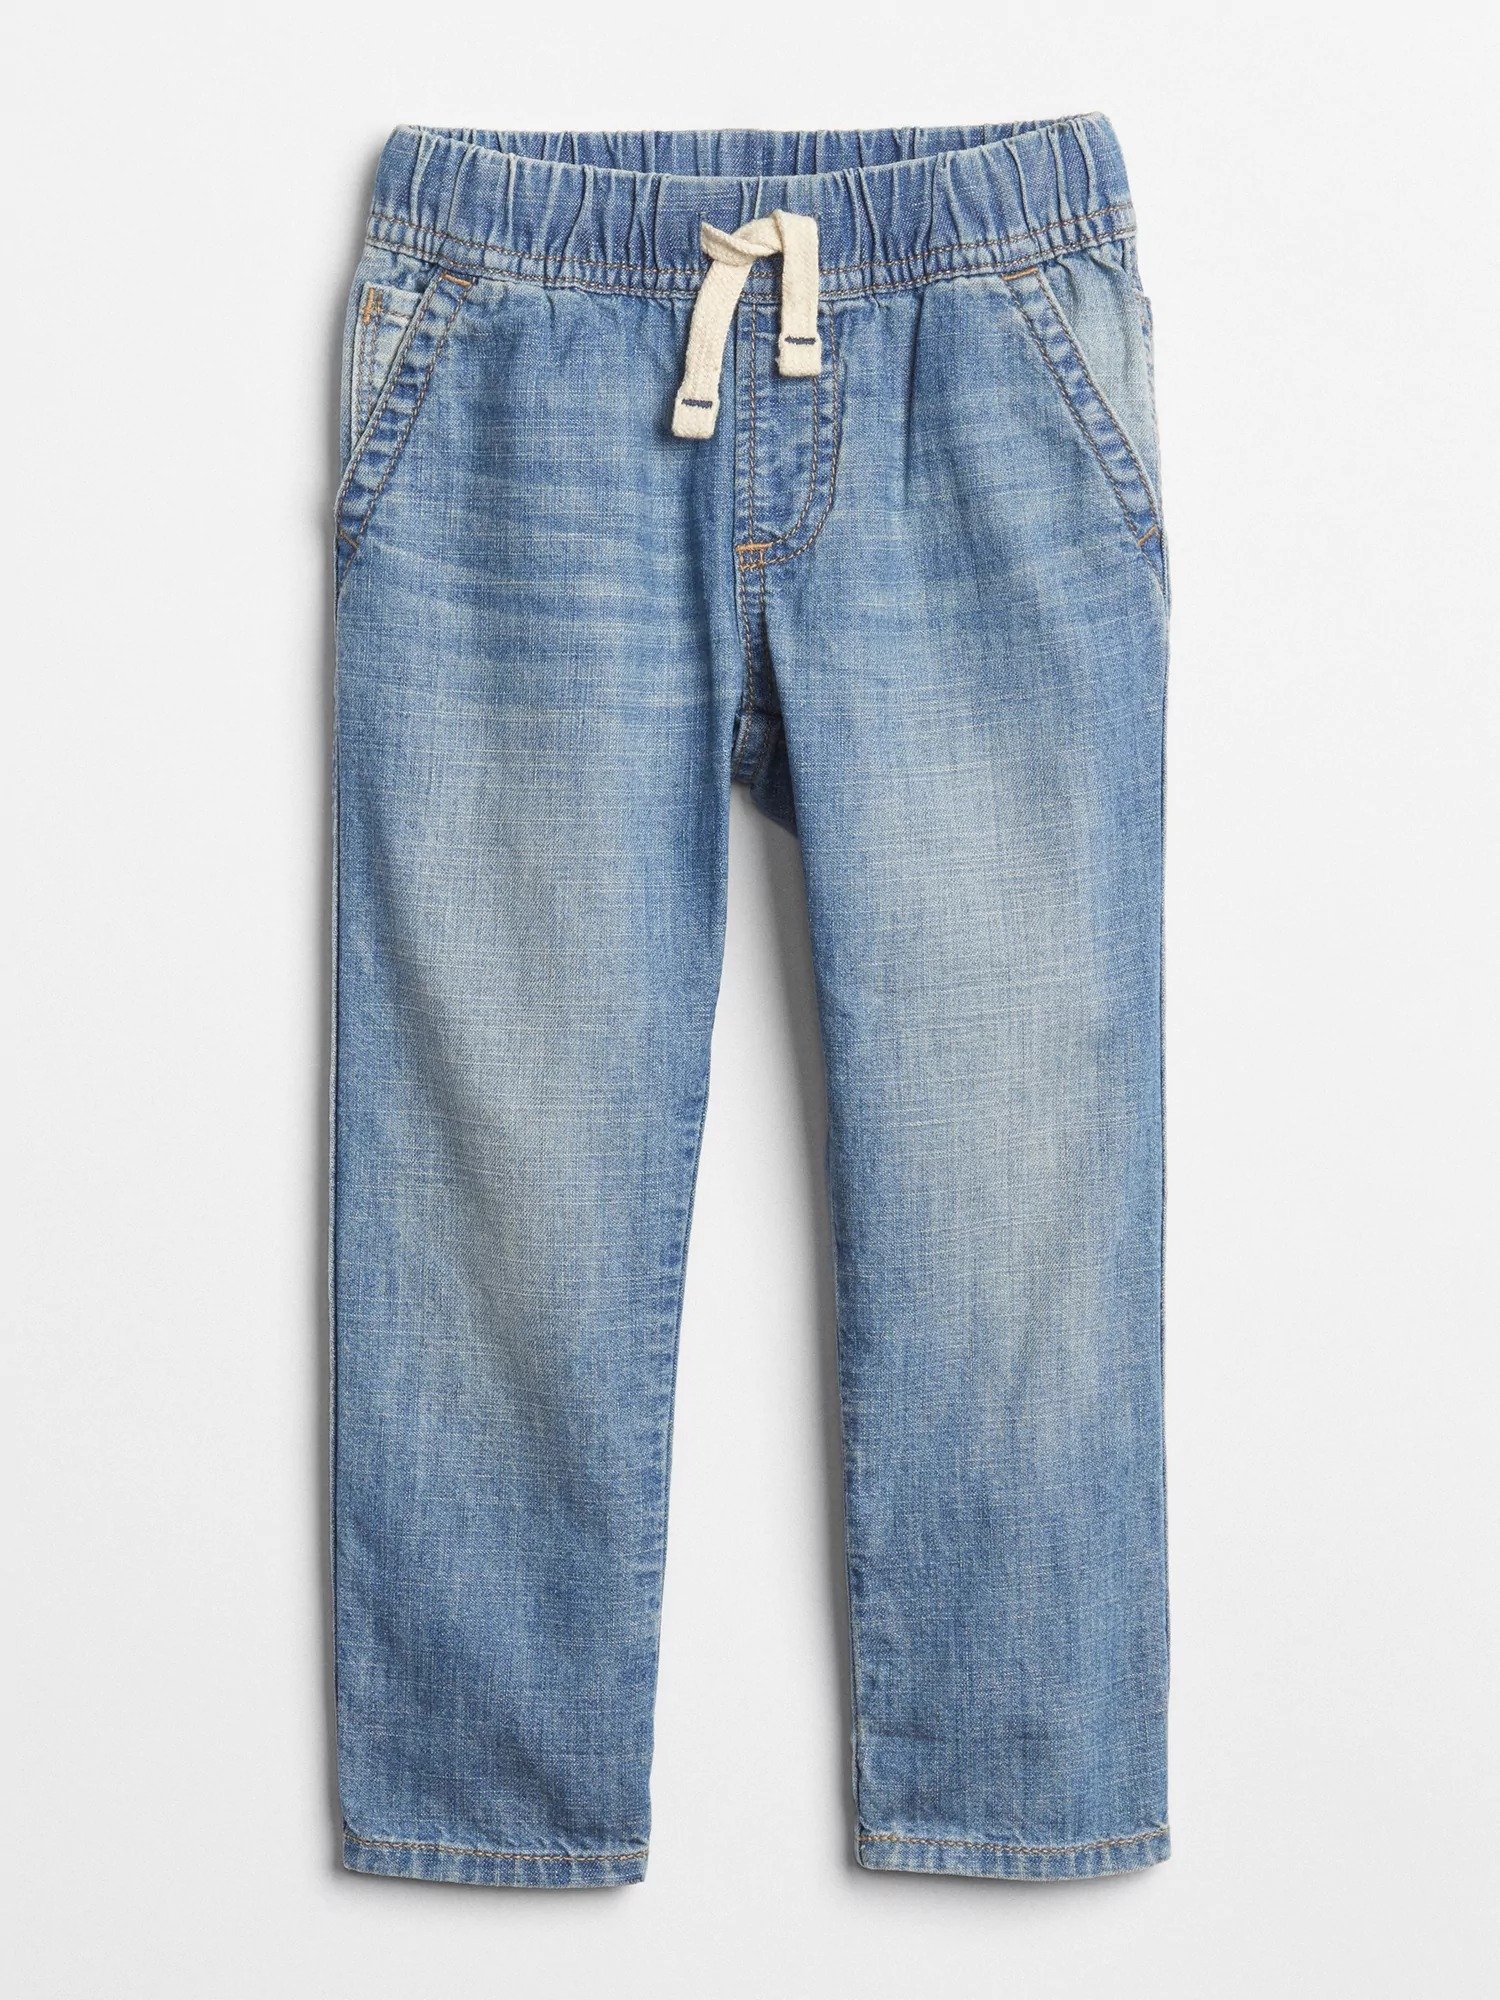 Wearlight slim jean pantolon product image